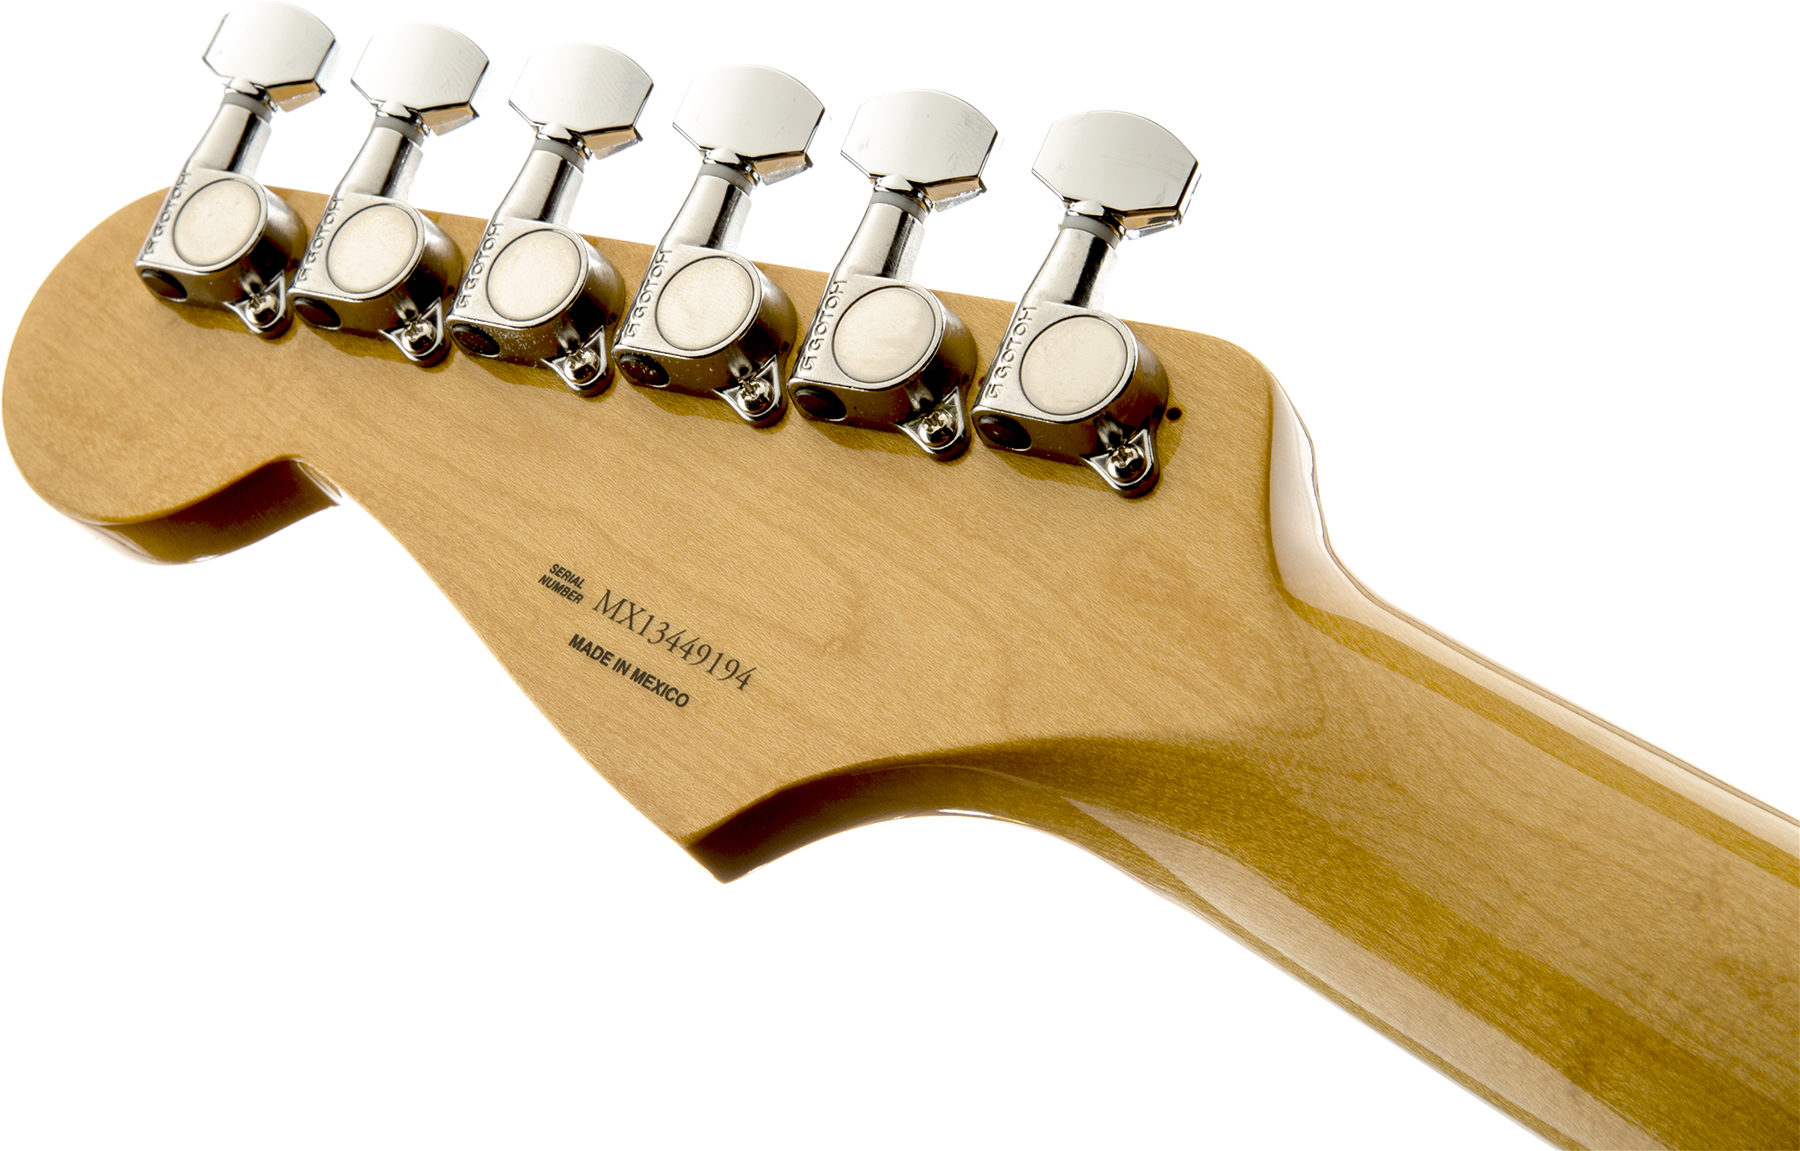 Fender Kurt Cobain Jaguar Mex Hh Trem Rw - 3-color Sunburst - Retro-rock elektrische gitaar - Variation 3